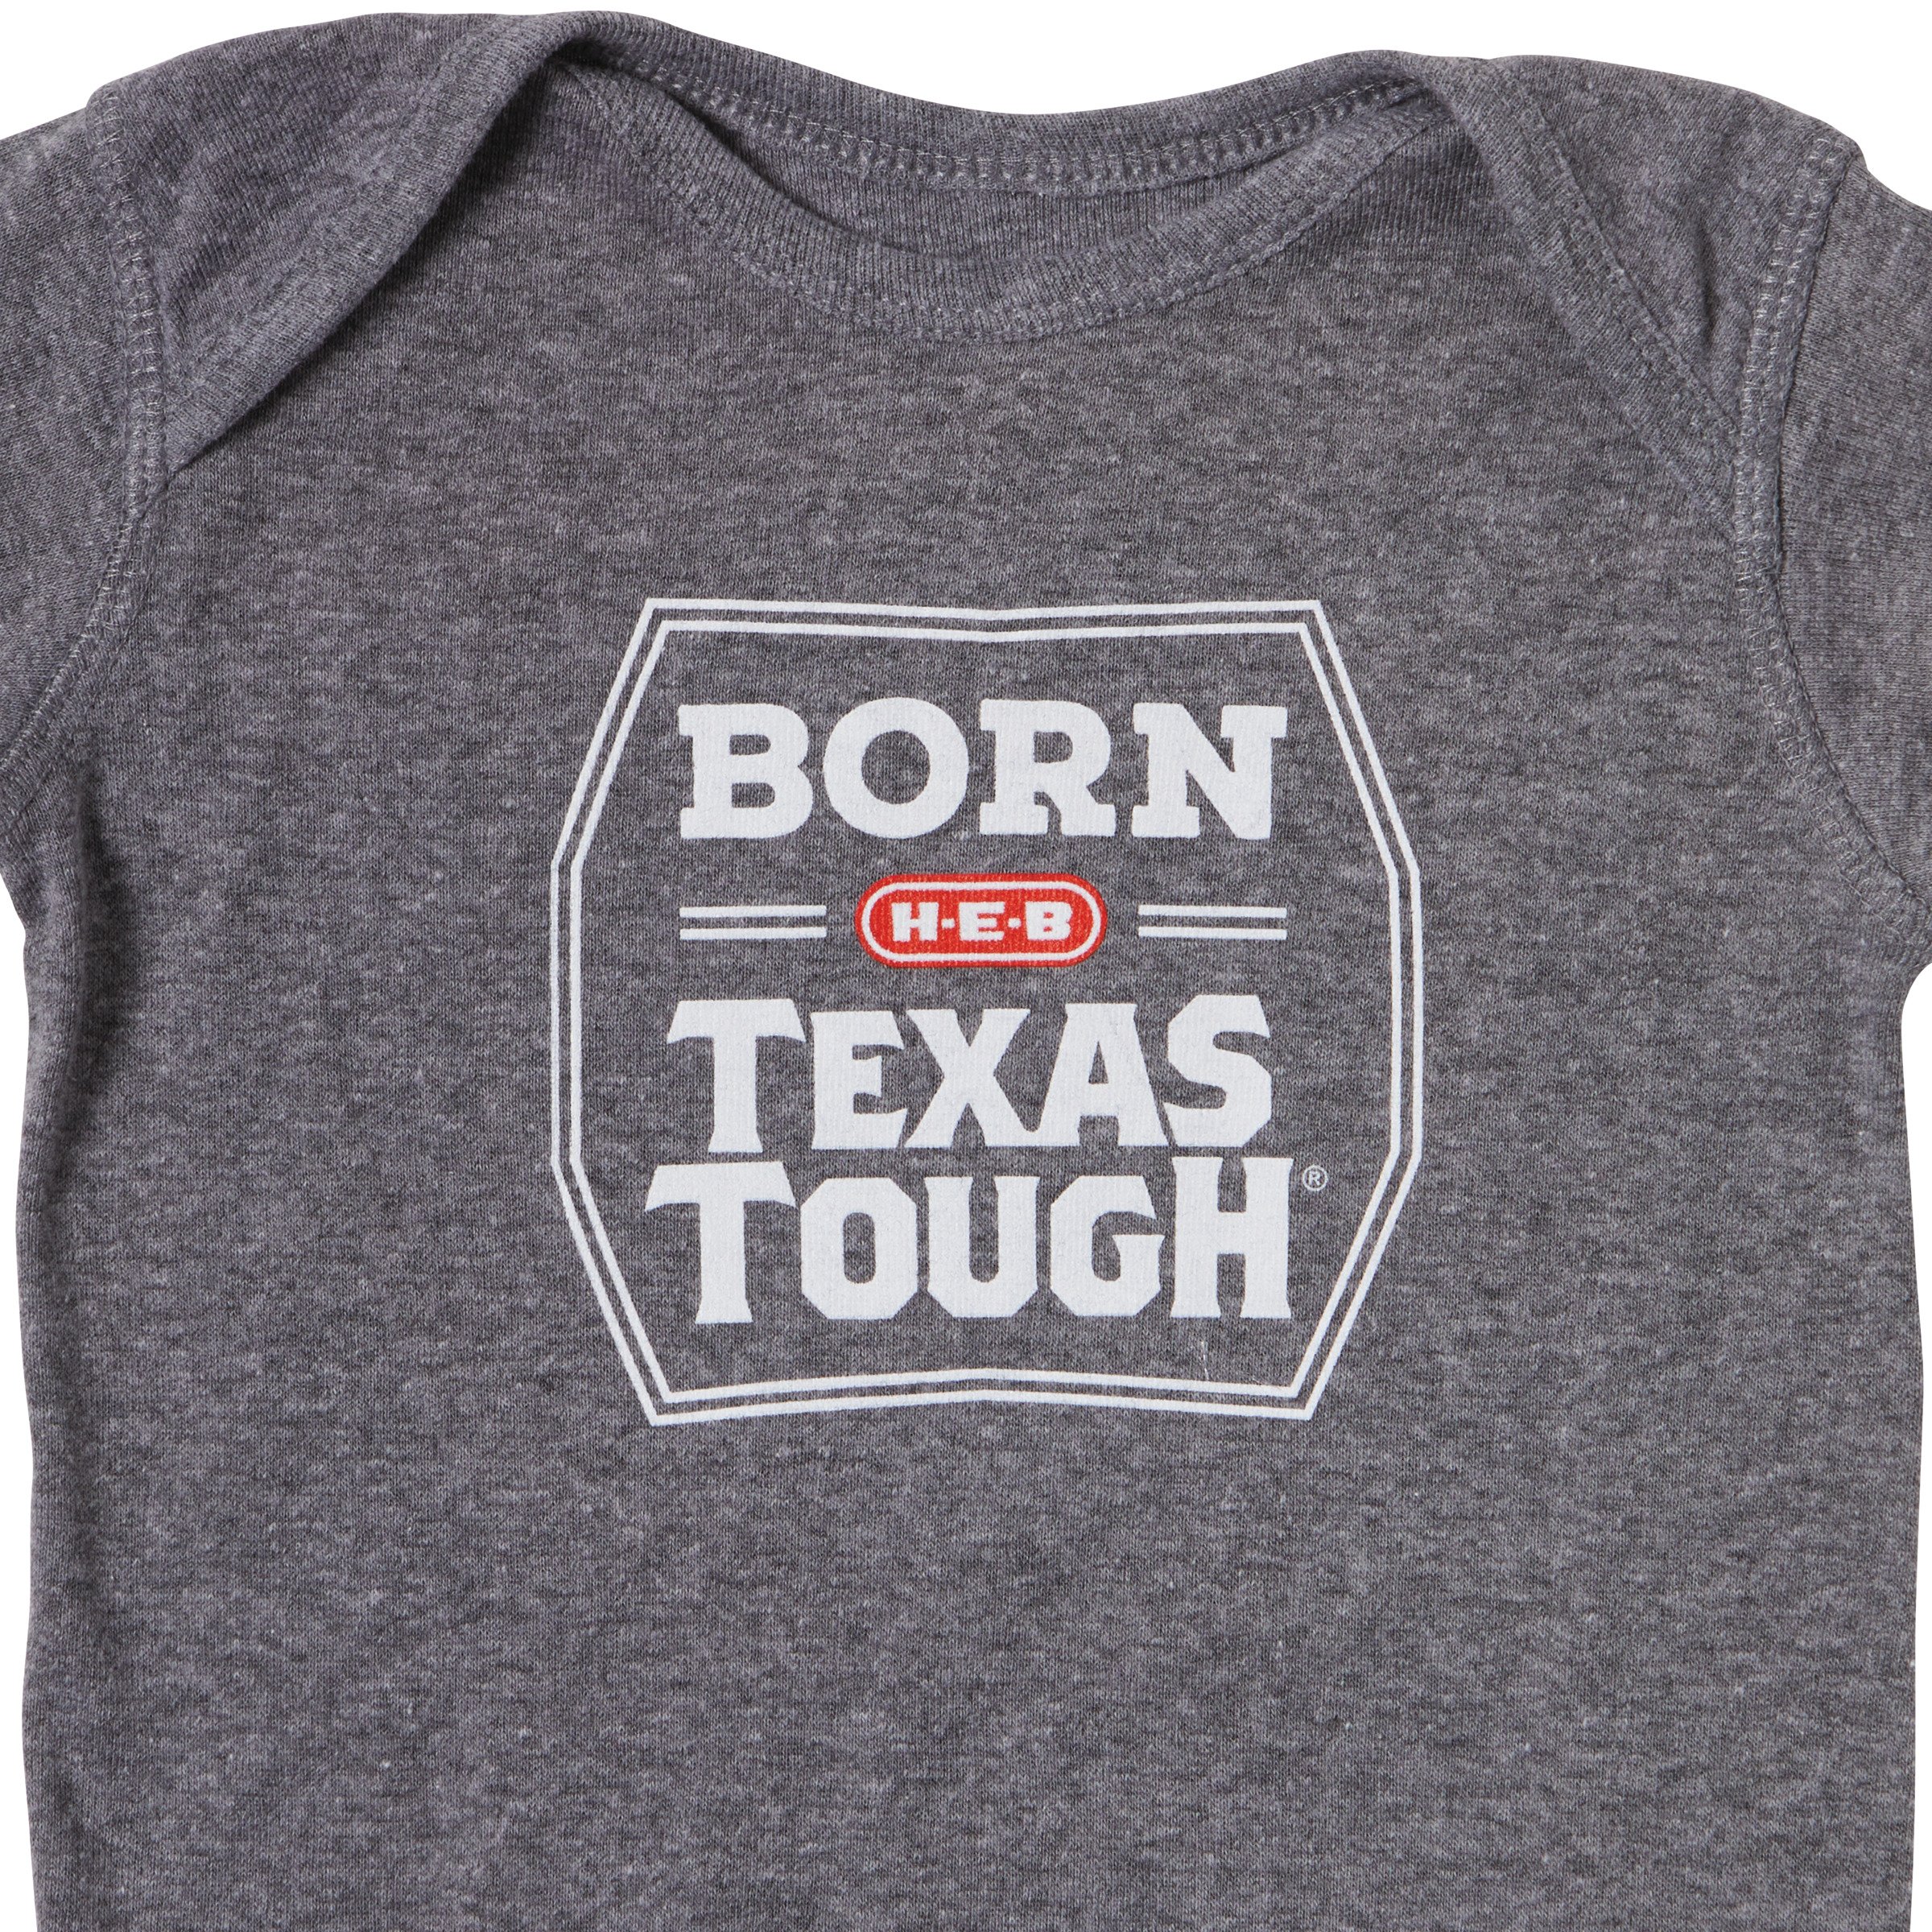 H-E-B Brand Shop Texas Tough Infant Bodysuit - Dark Gray